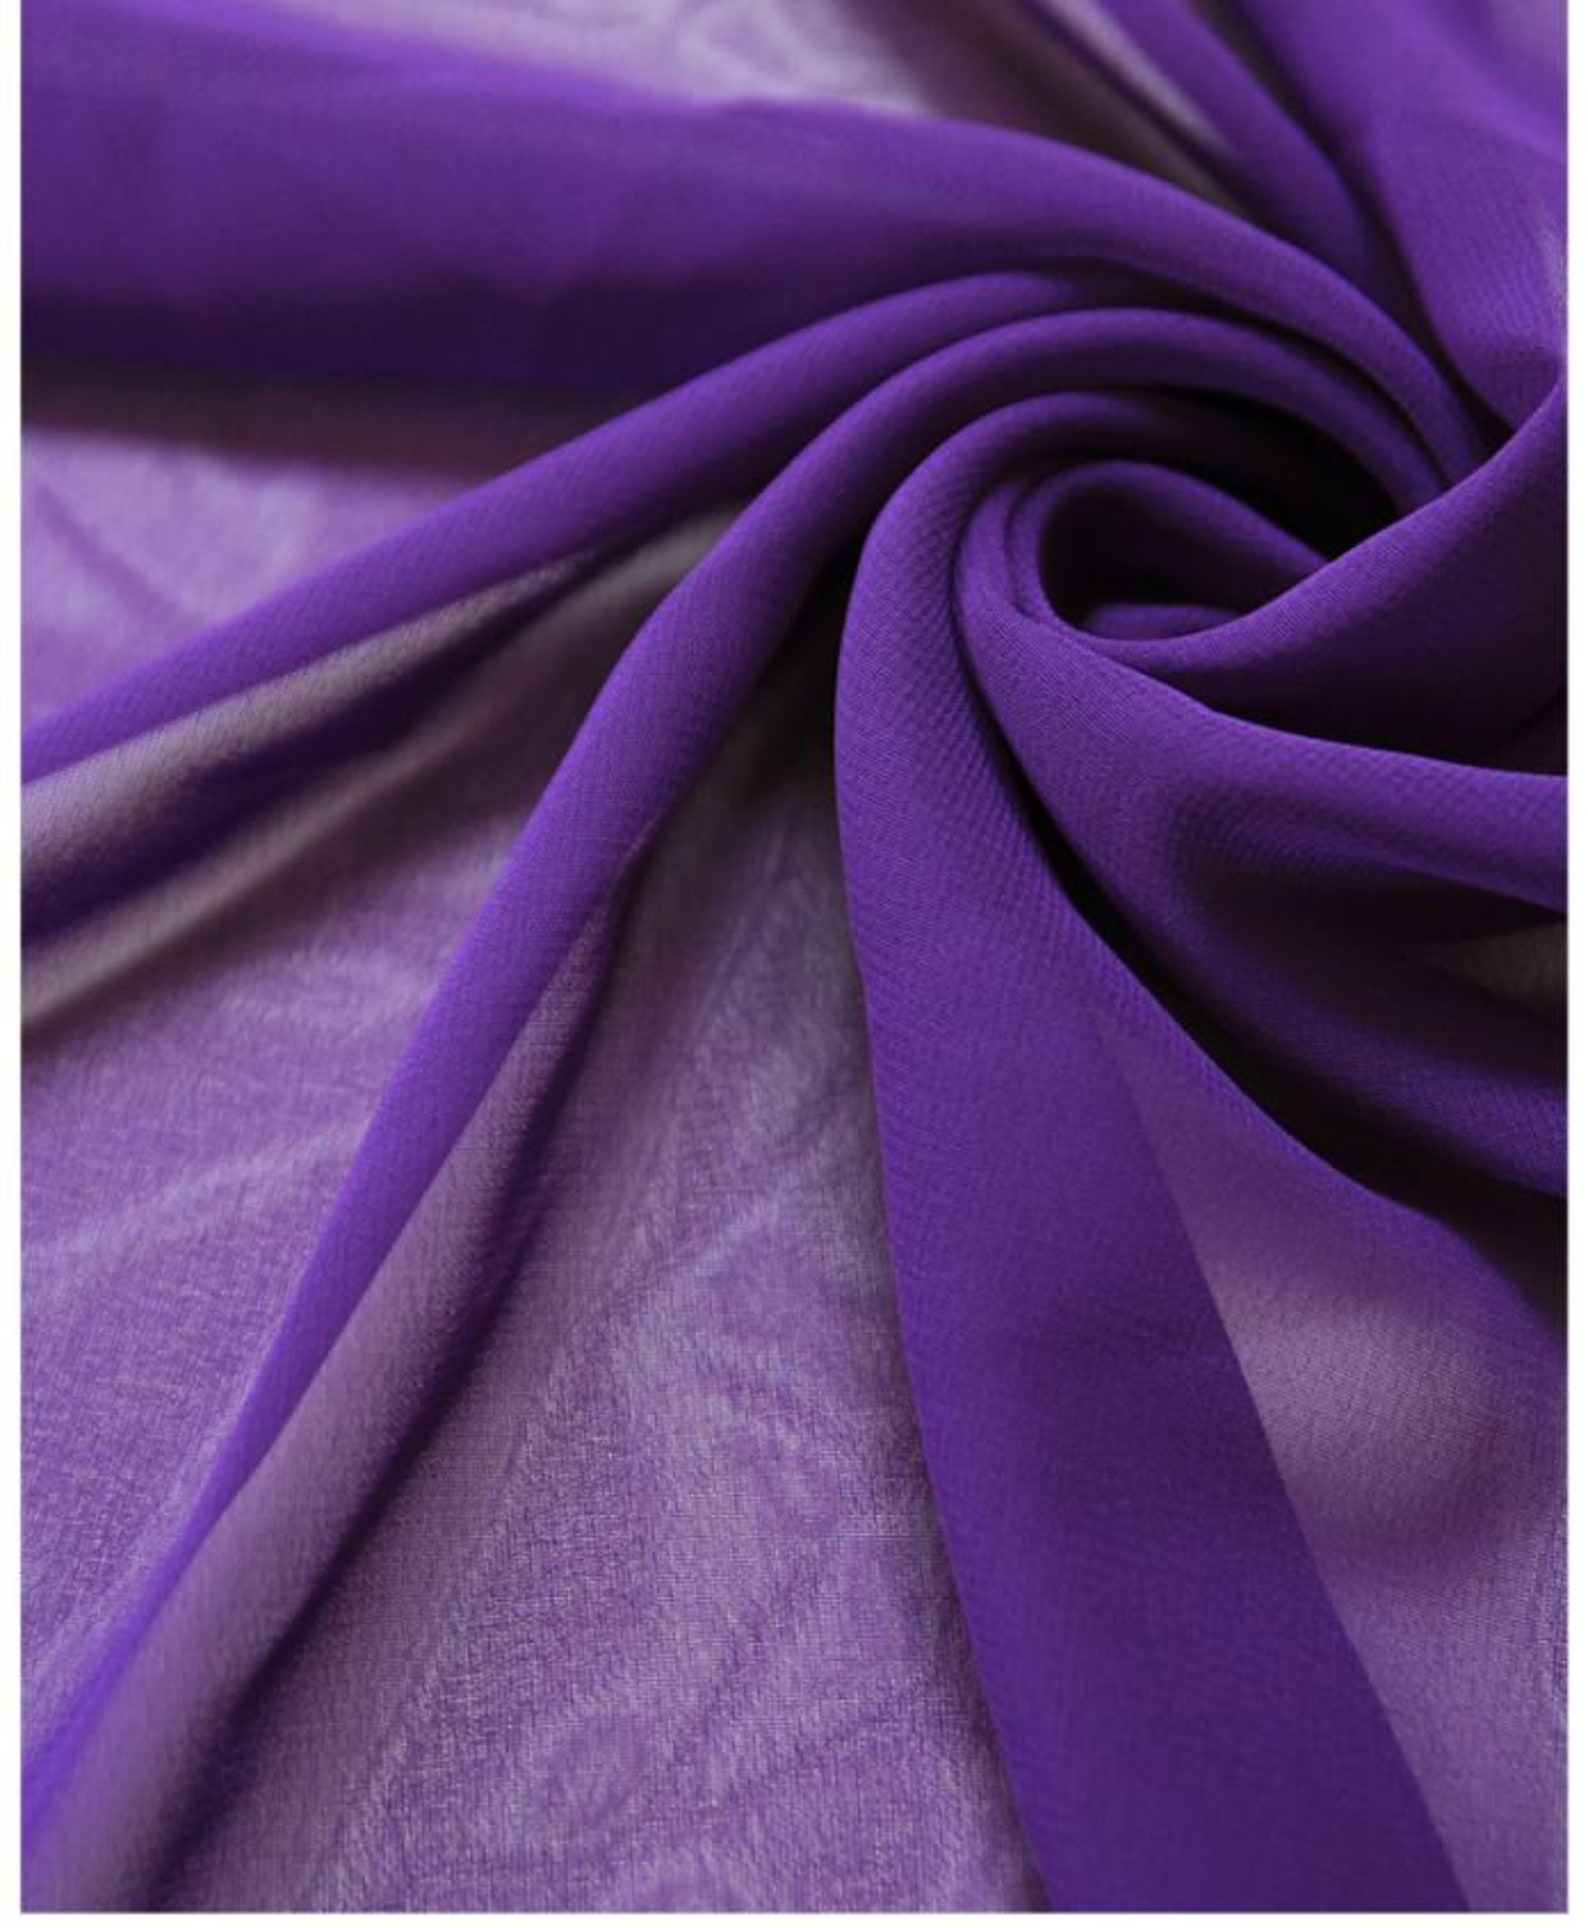 Fabric Purple High Multi Solid Chiffon Fabric 59 Wide | Etsy